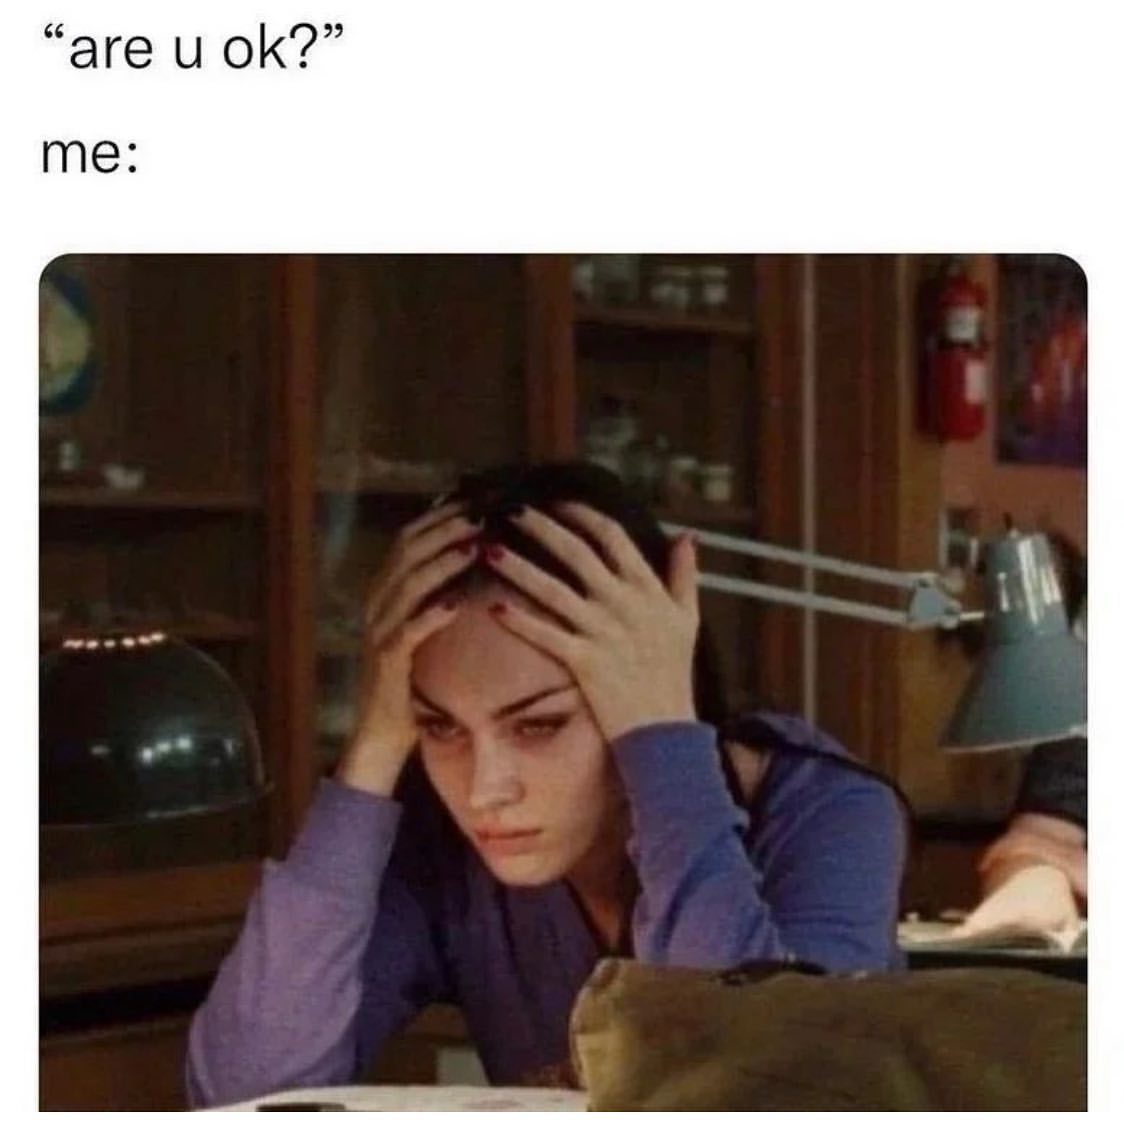 "Are u ok?" Me: